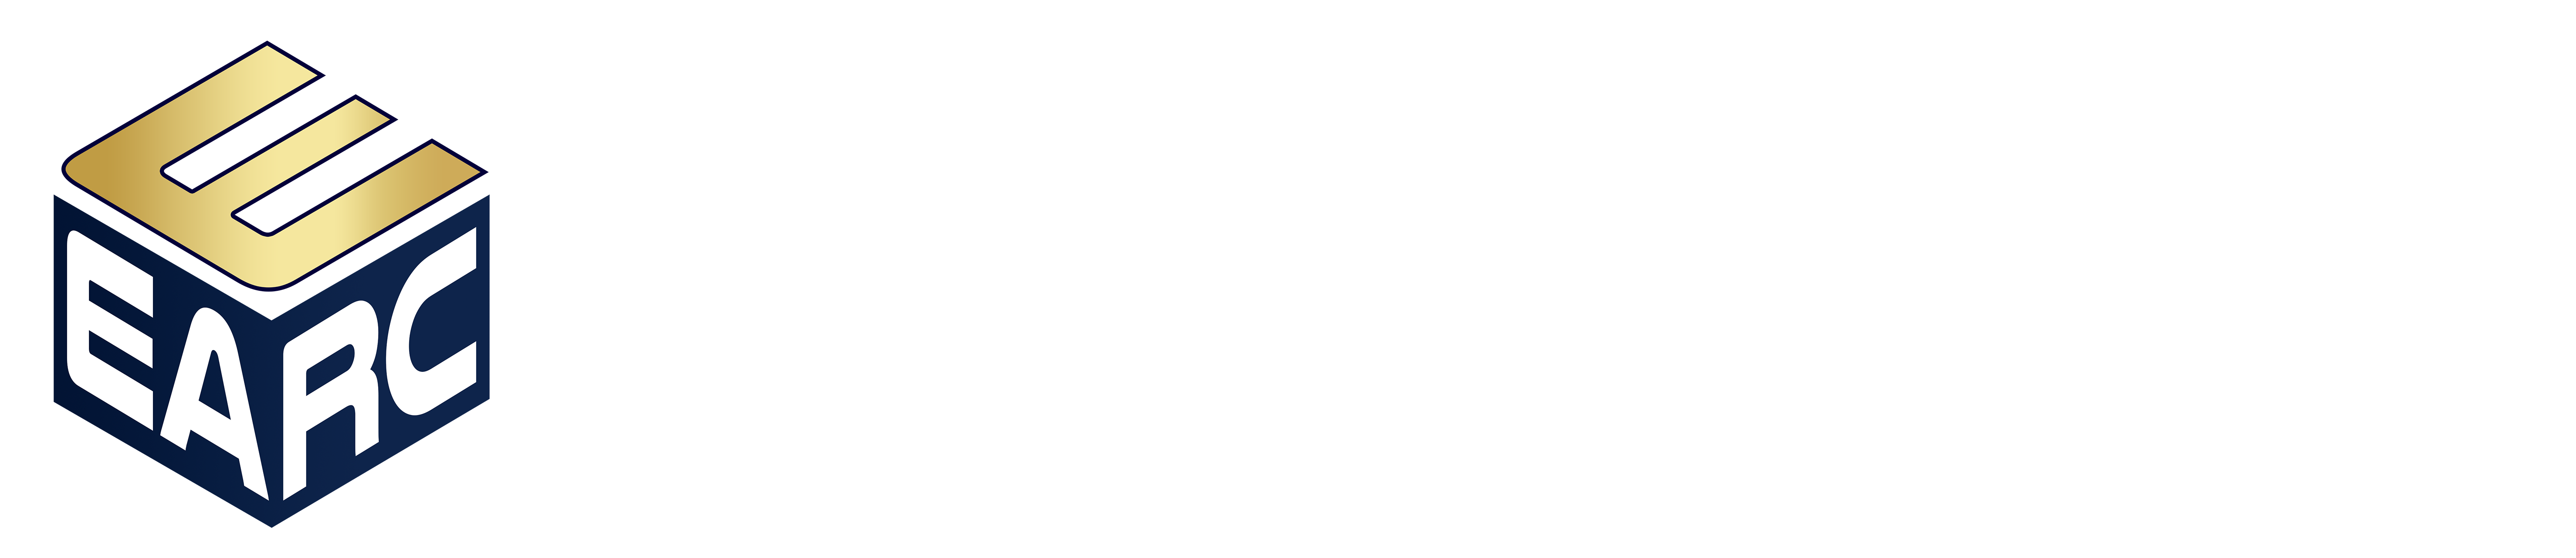 Fajar Al Eman Co - AC Service | Duct Cleaning | Refrigeration | Lift Maintenance